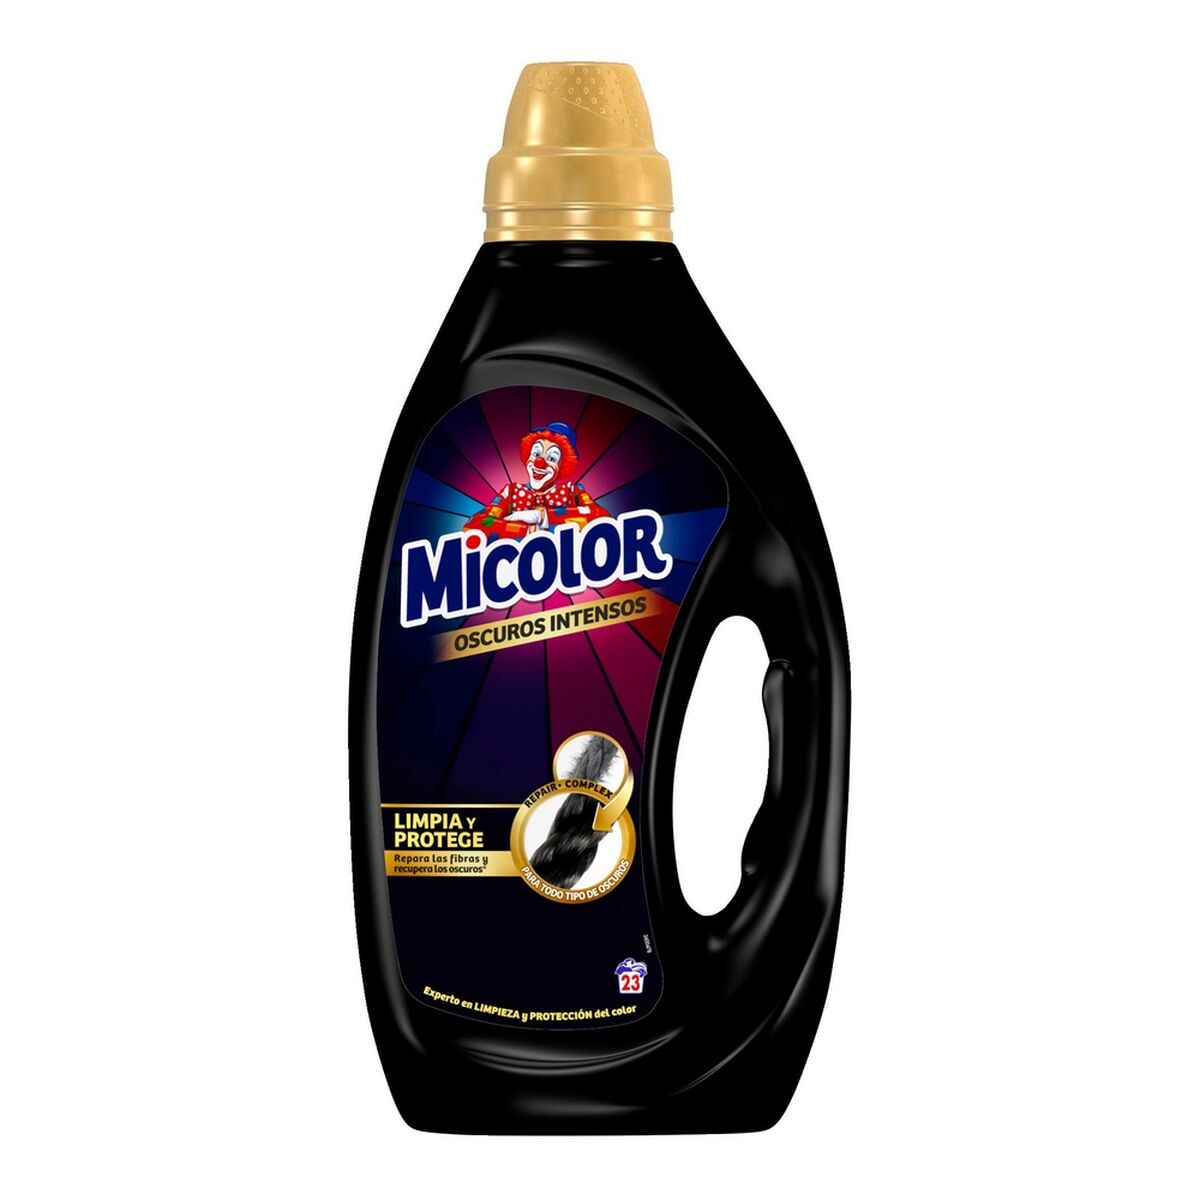 Liquid detergent Micolor Dark clothes (1,15 L)